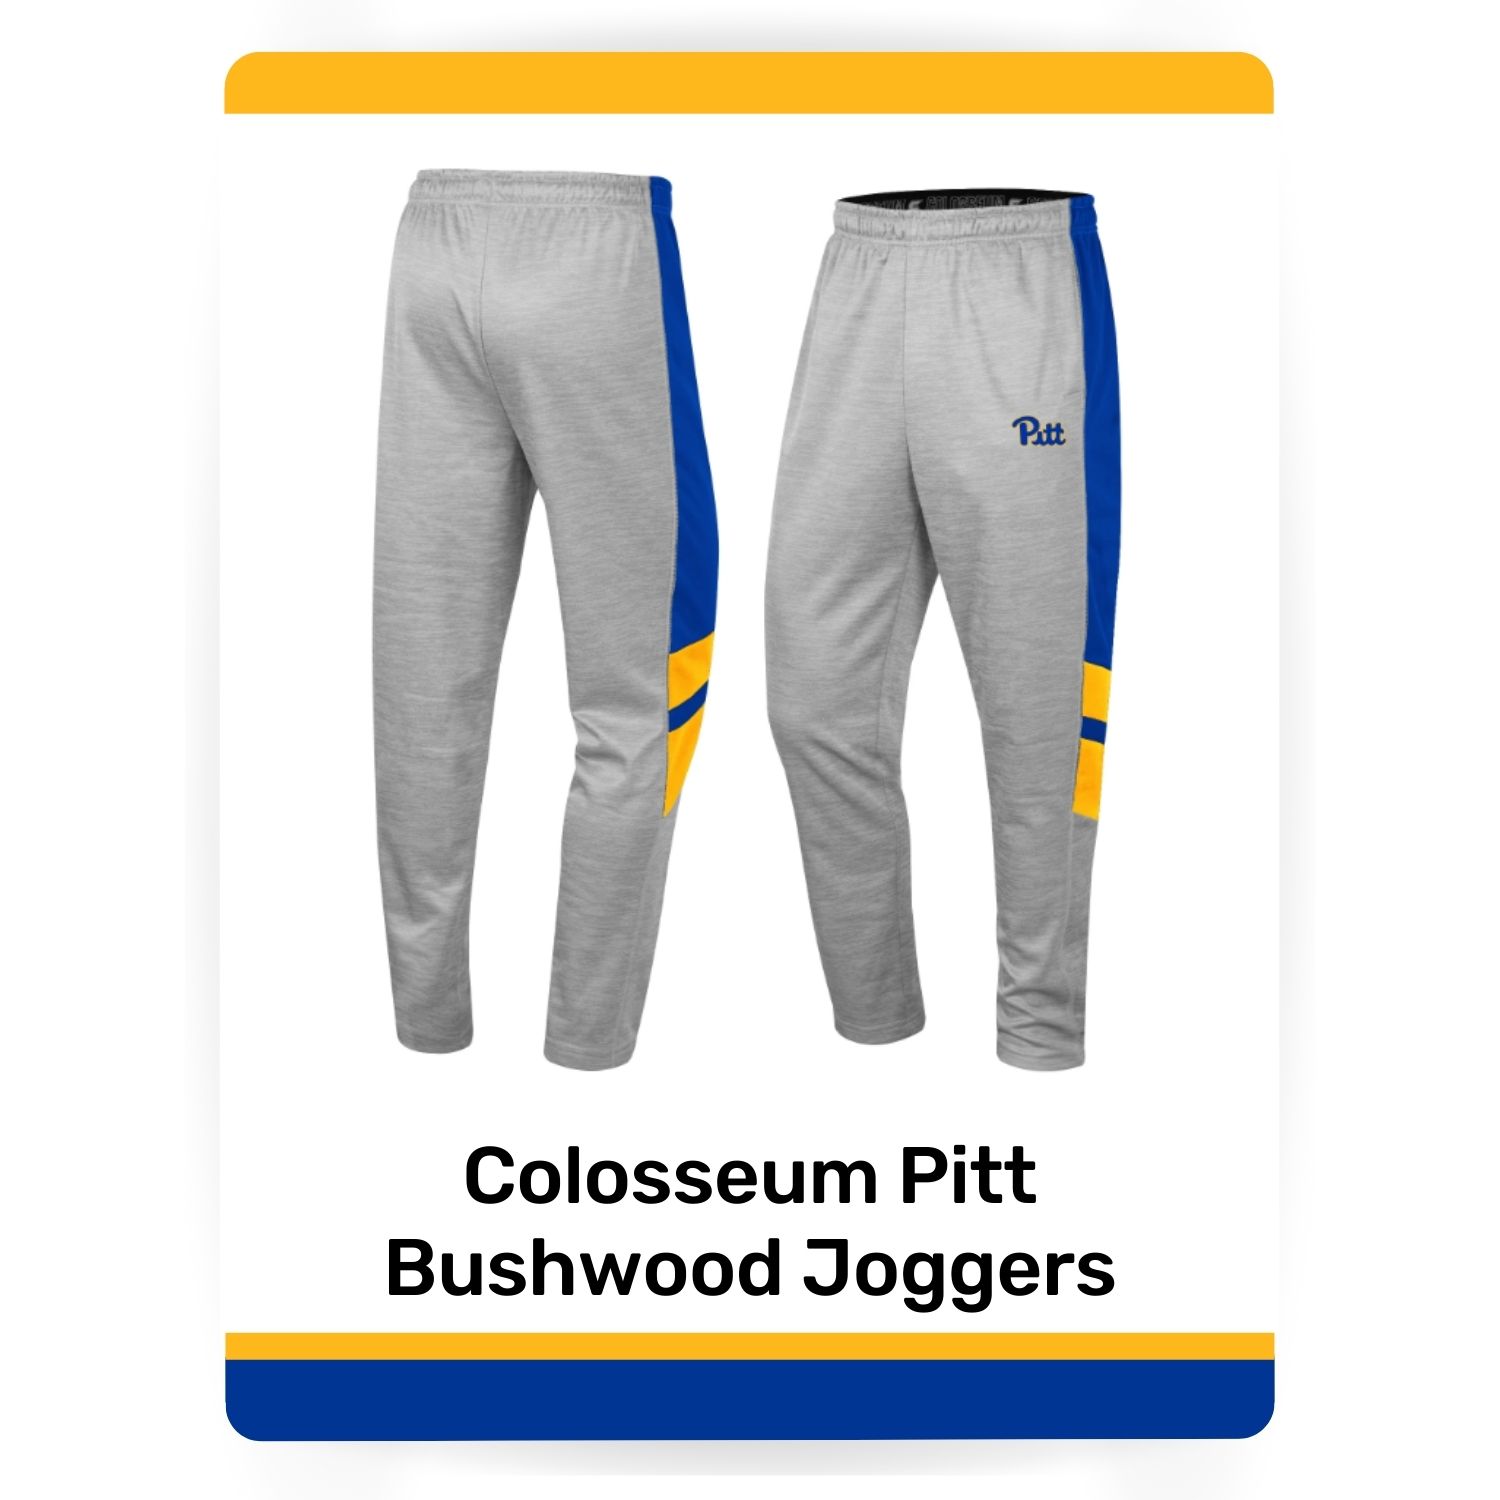 Colosseum Pitt Bushwood Joggers